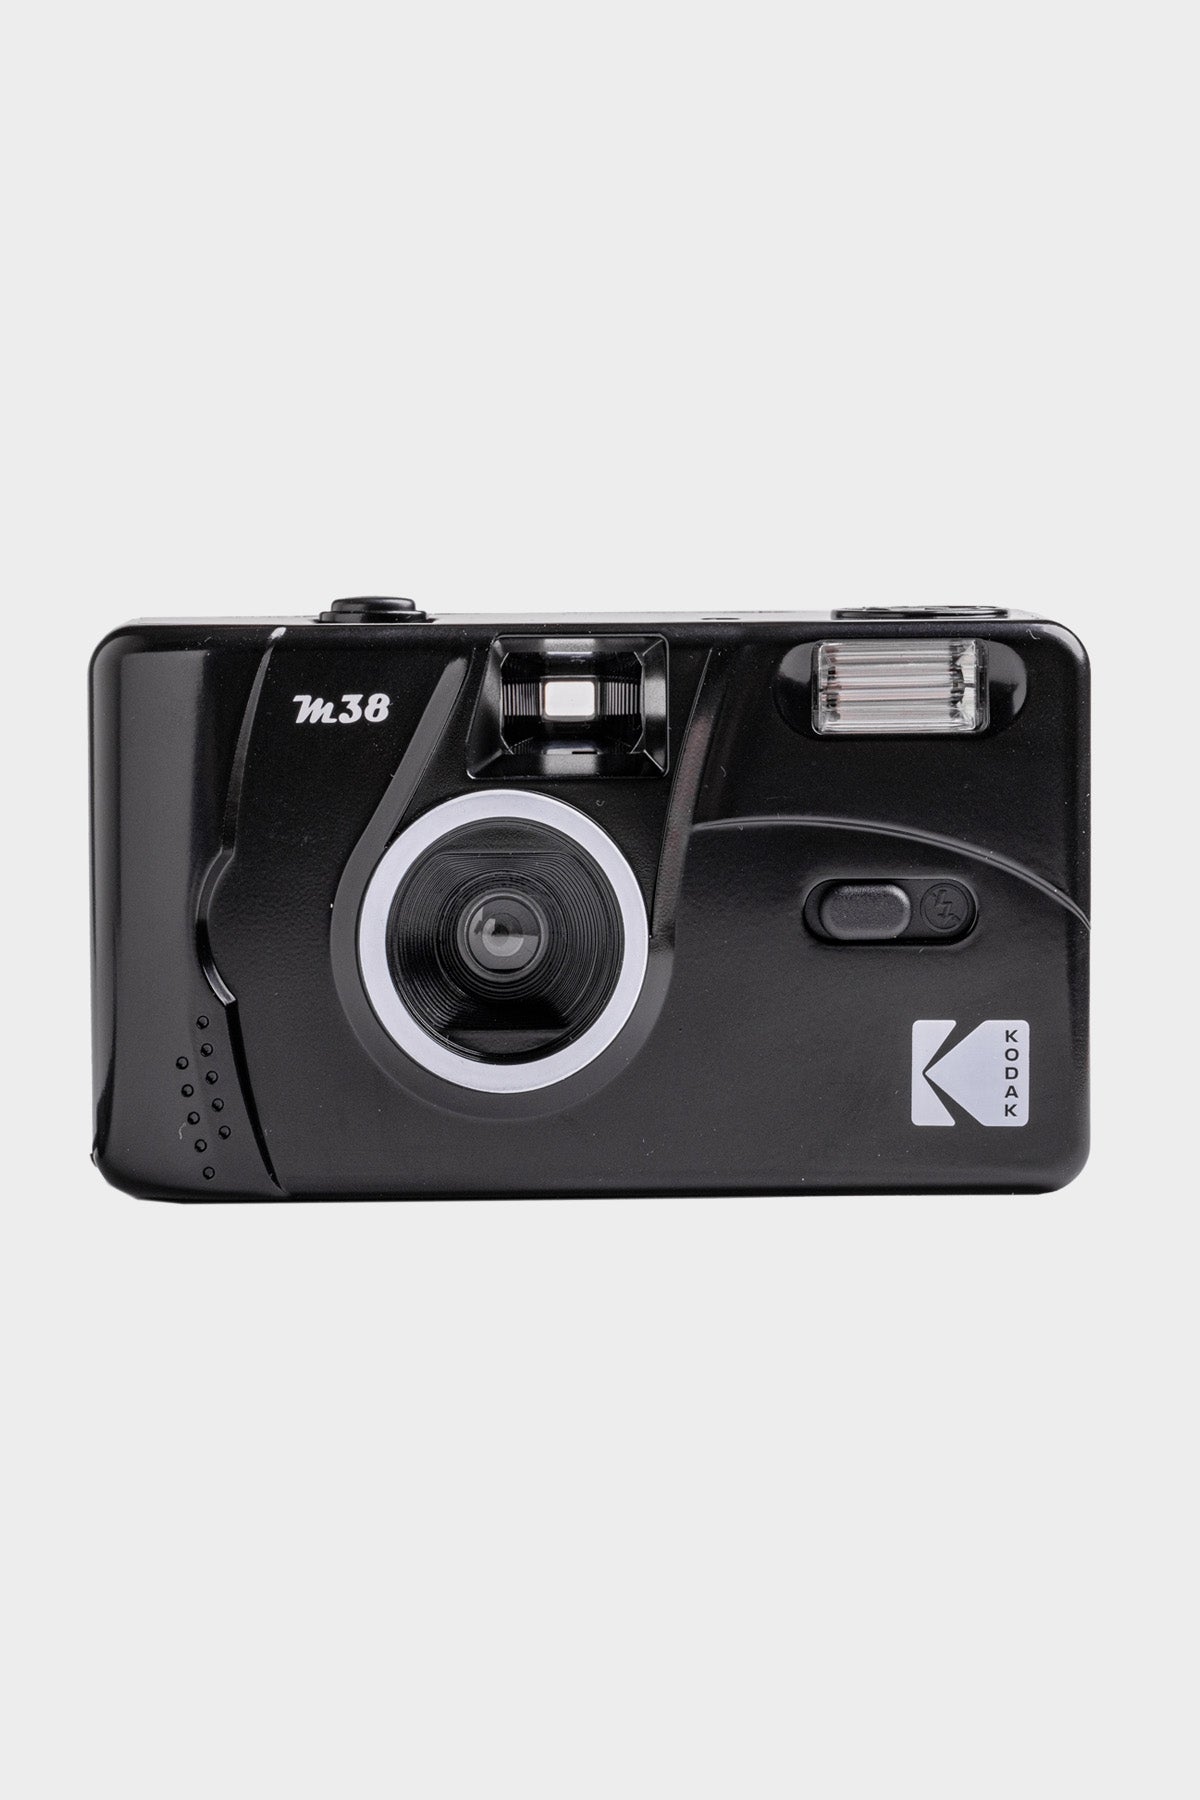 Kodak M38 Reusable Film Camera Starry Black